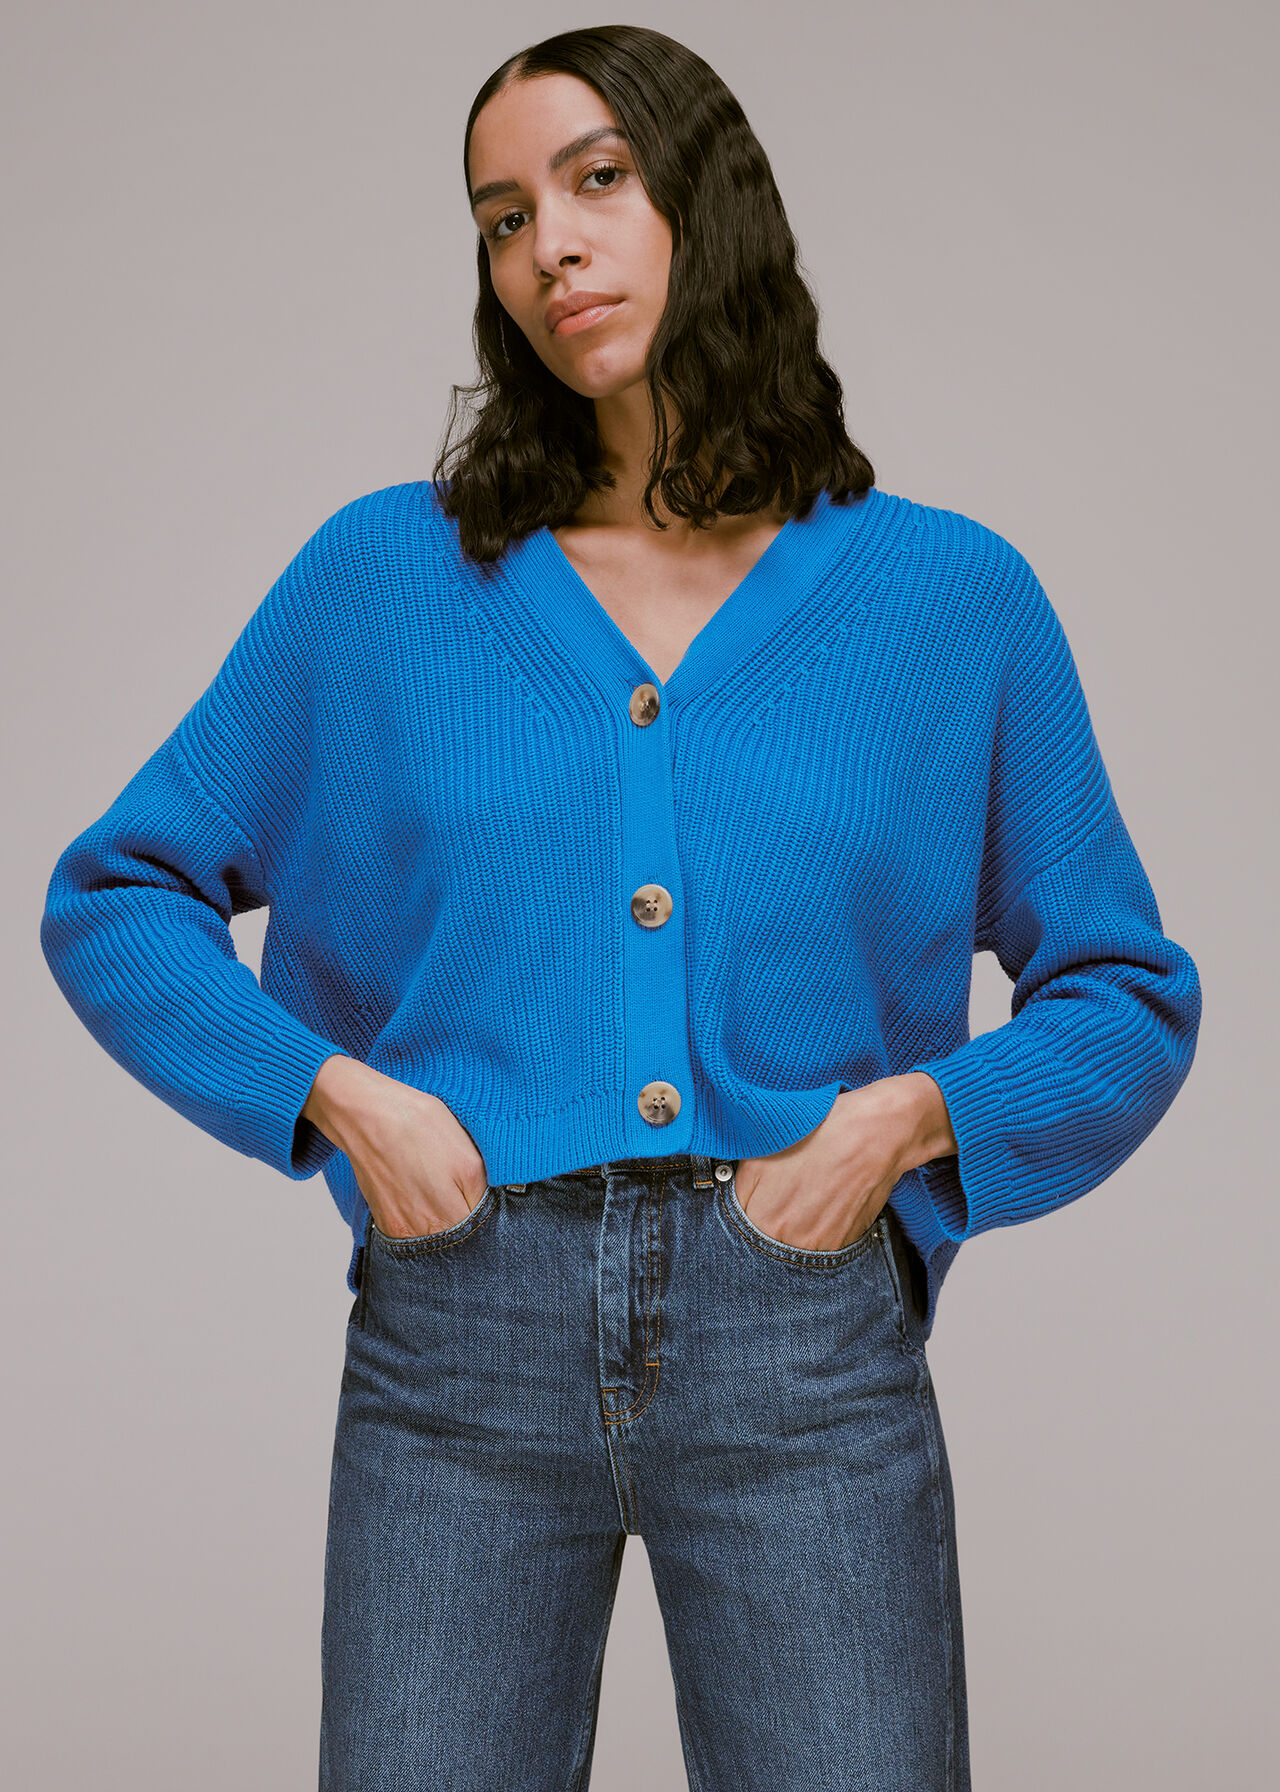 Blue Mara Knitted Cardigan | WHISTLES